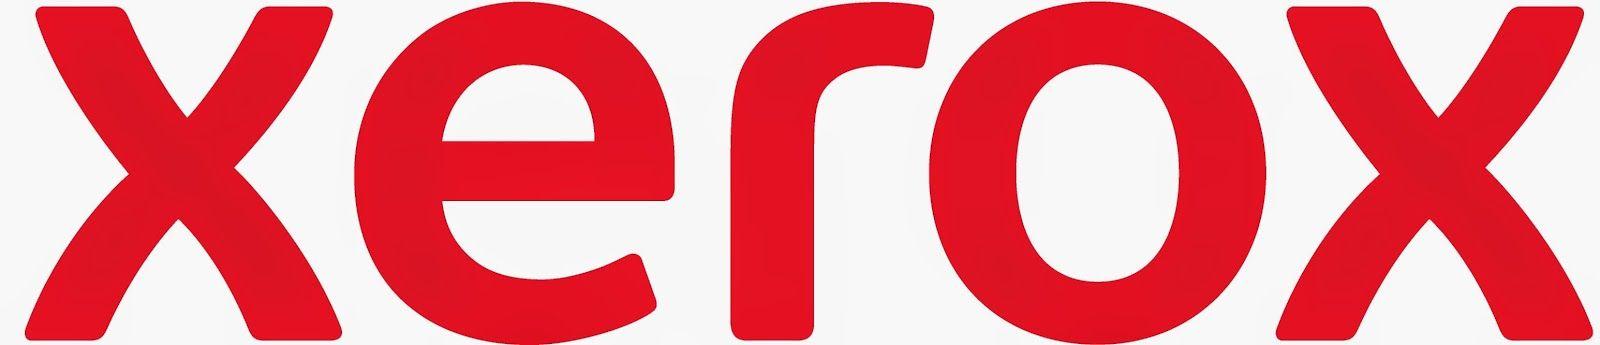 Xerox Corporation Logo - Xerox Corporation Hiring Systems Development Analyst - Job Search In ...